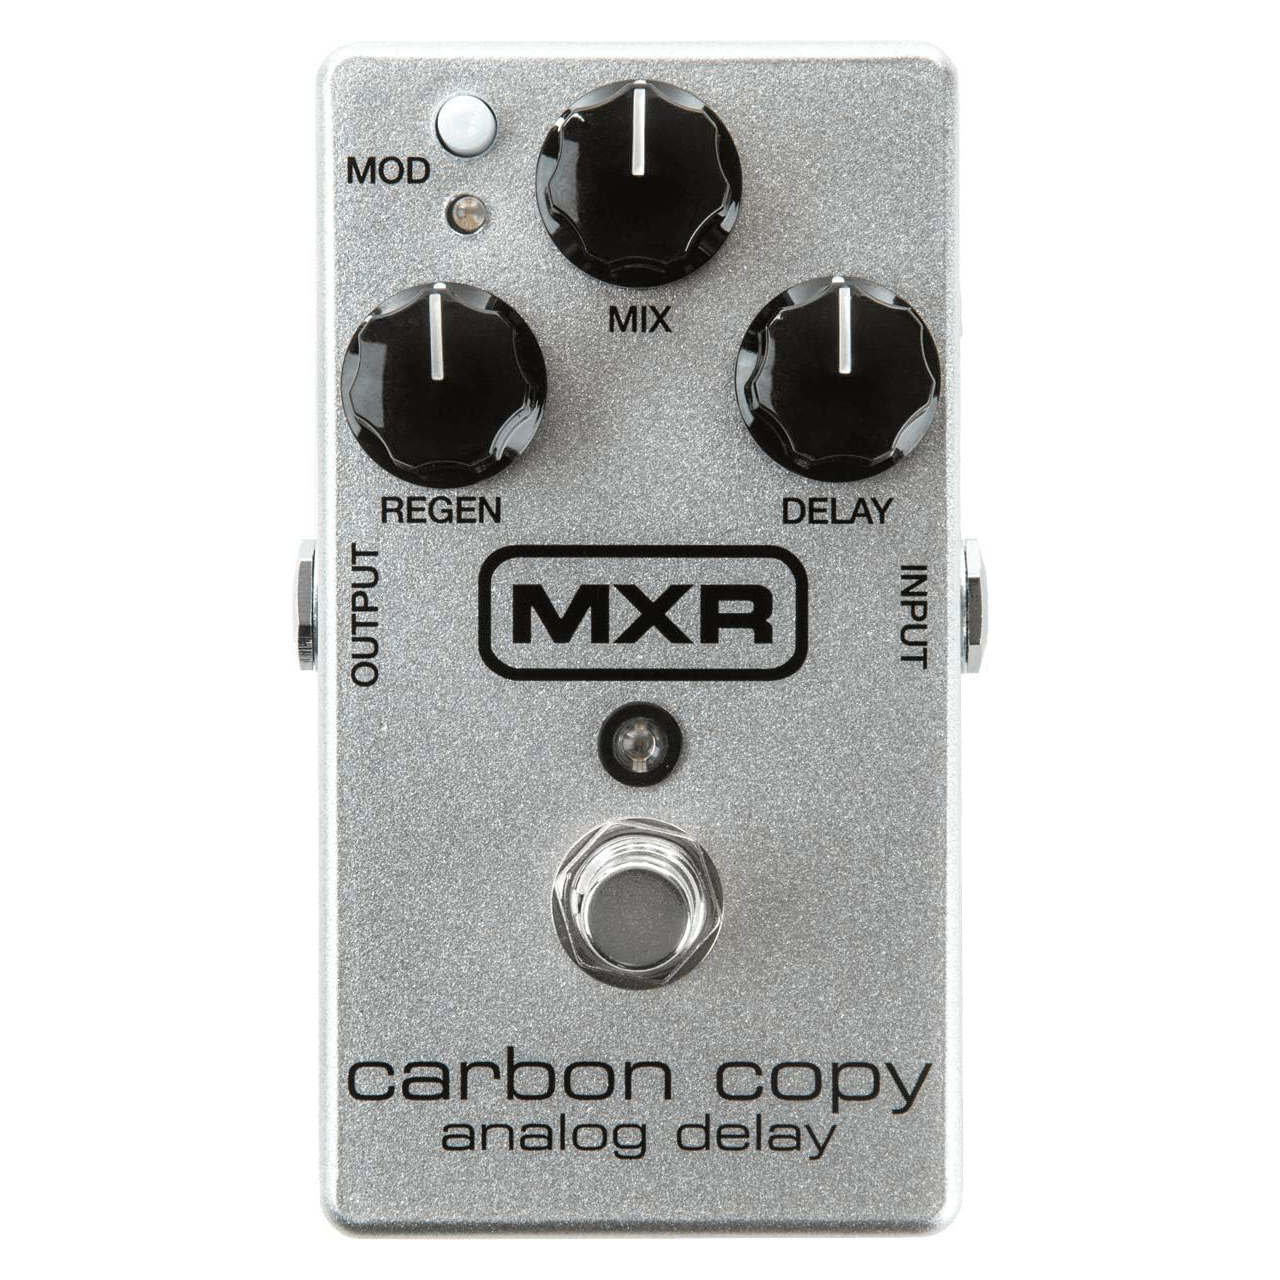 MXR Carbon Copy Analog Delay 10th Anniversary Edition